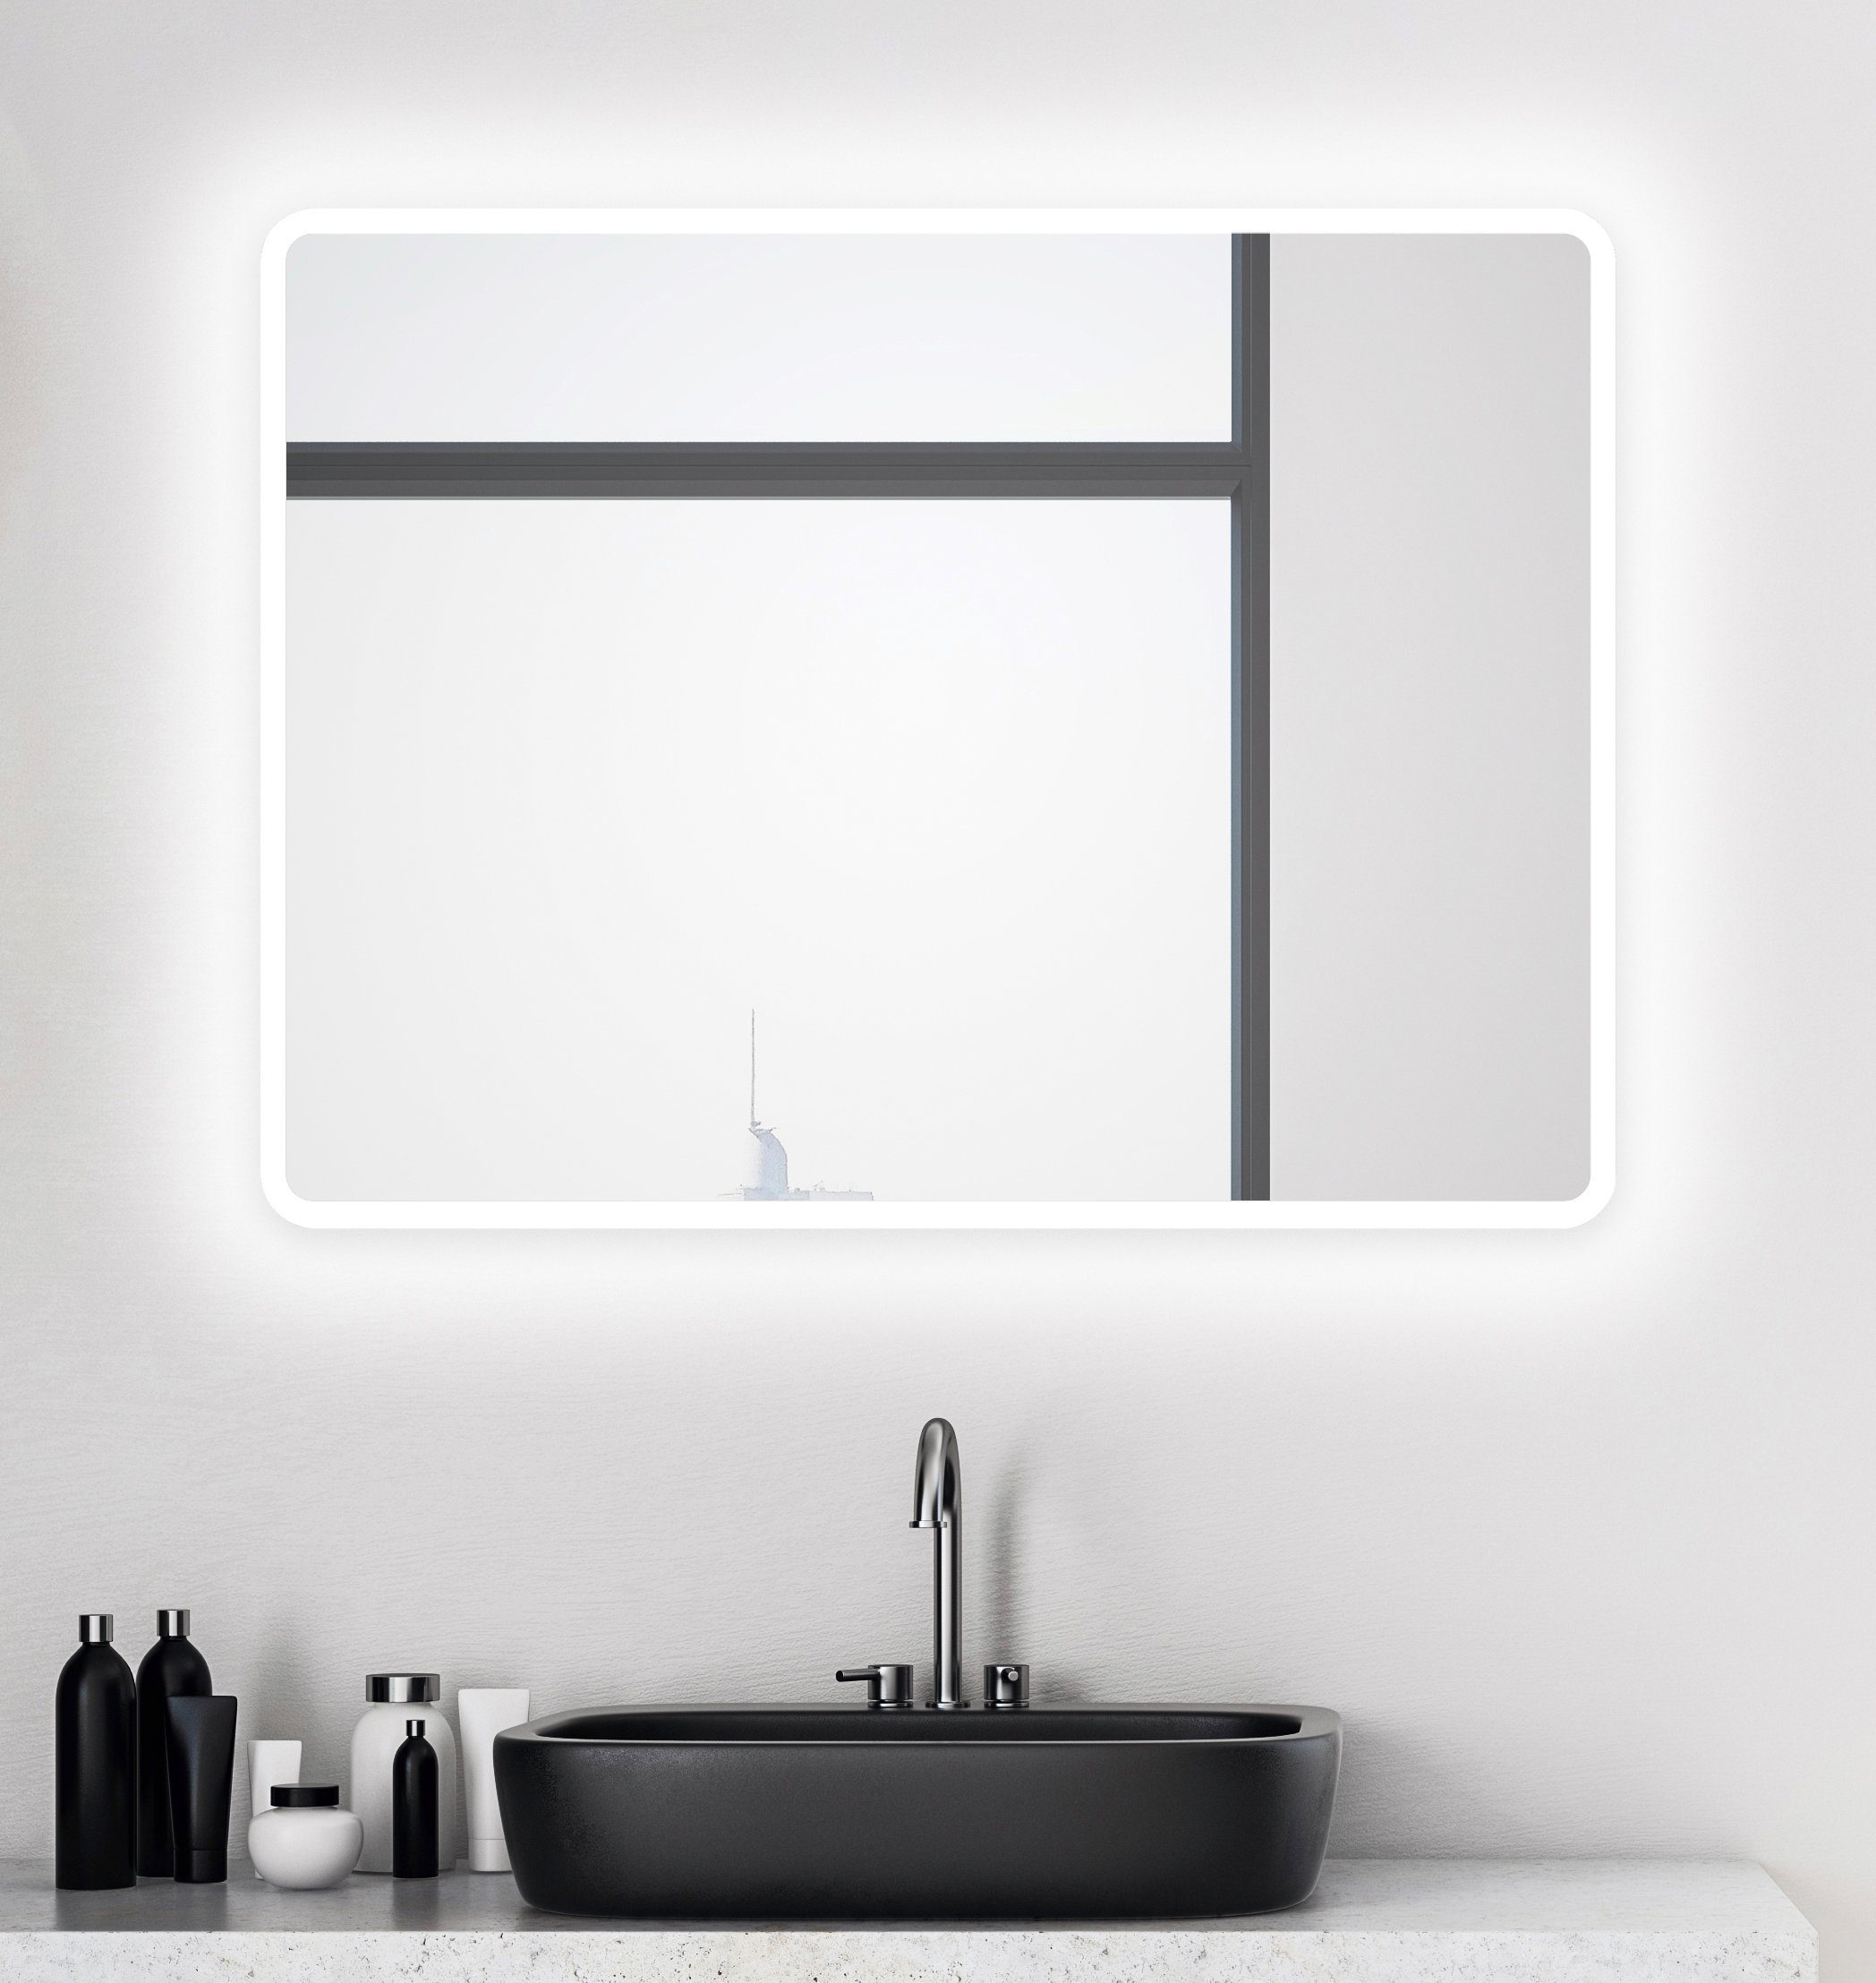 Talos Badspiegel Talos Black Moon, 80 x 60 cm, Design Lichtspiegel silber matt